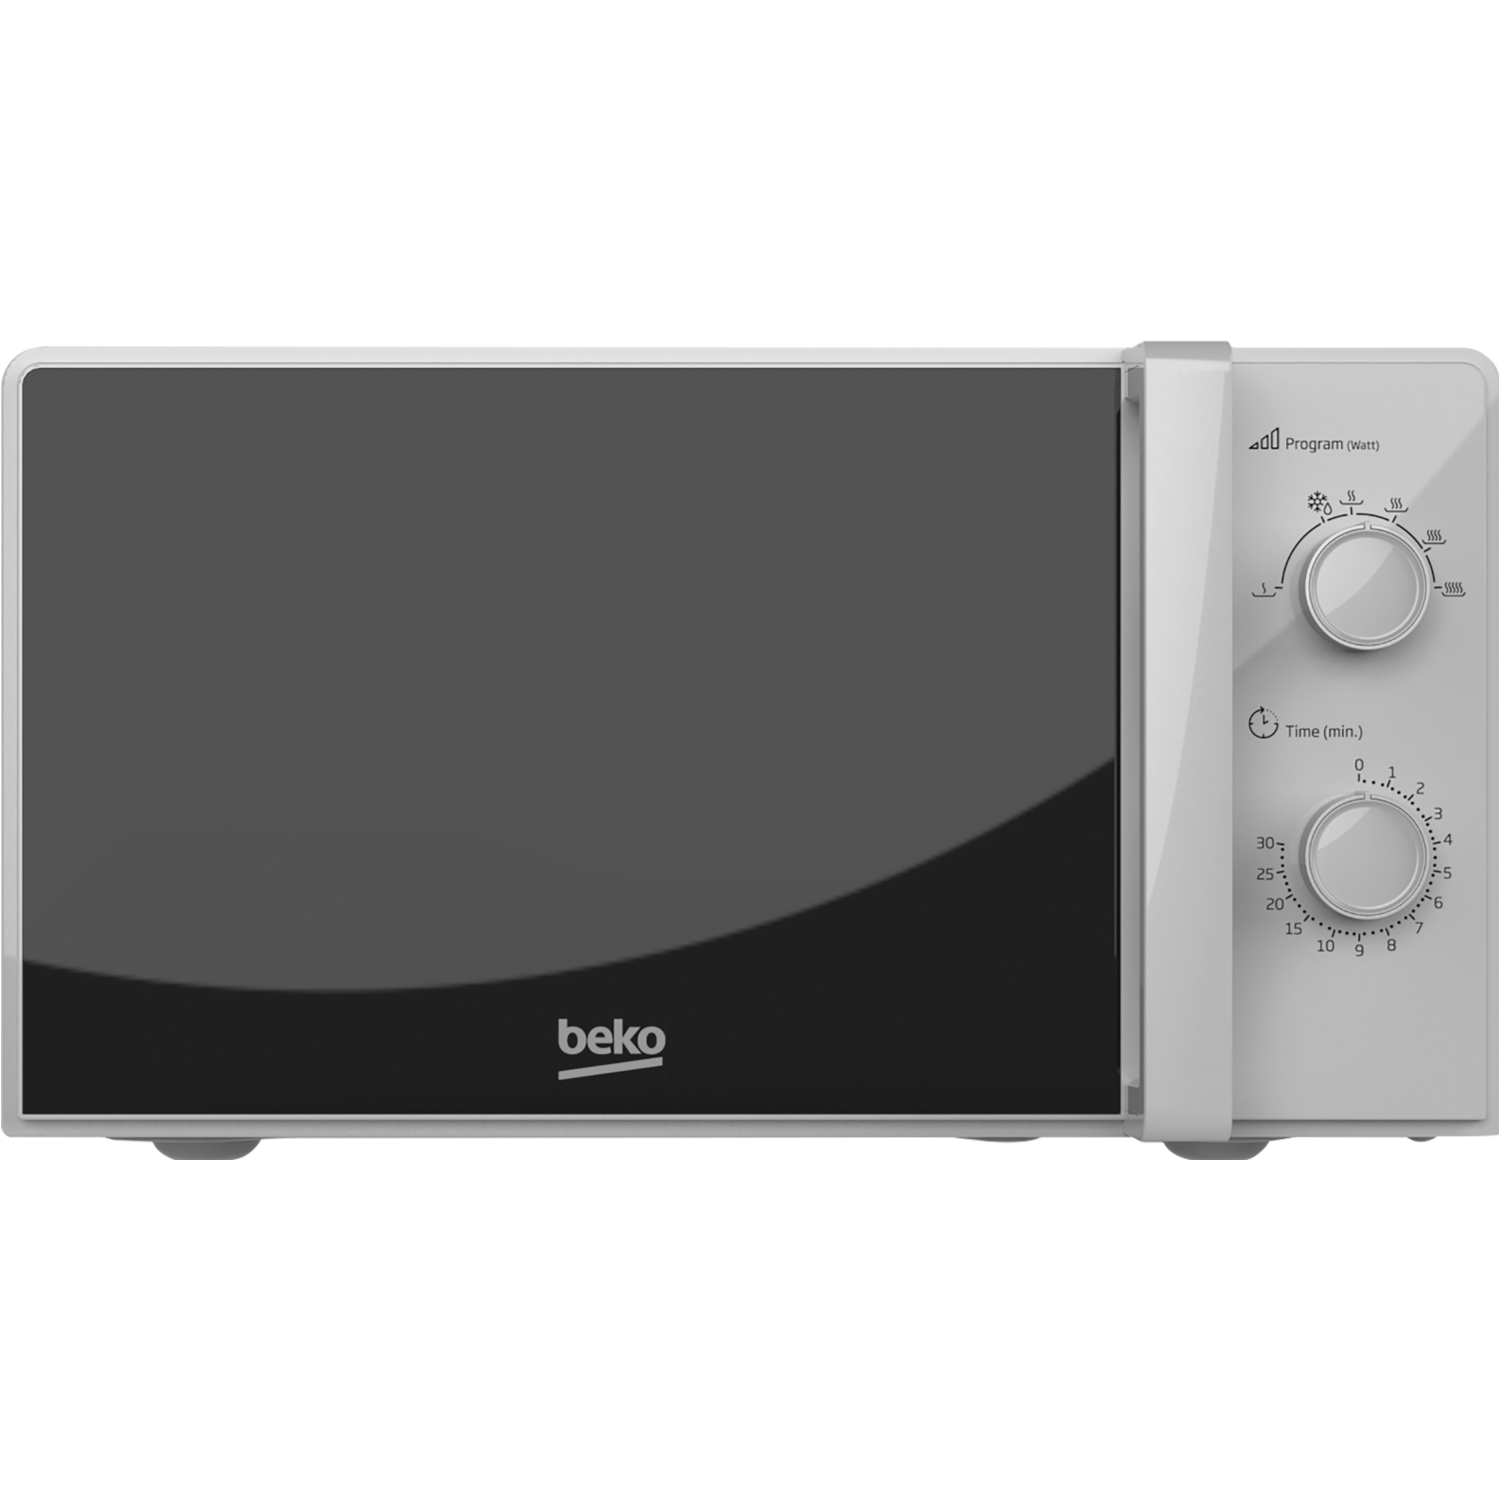 Beko Compact Microwave 700w - Silver  | TJ Hughes